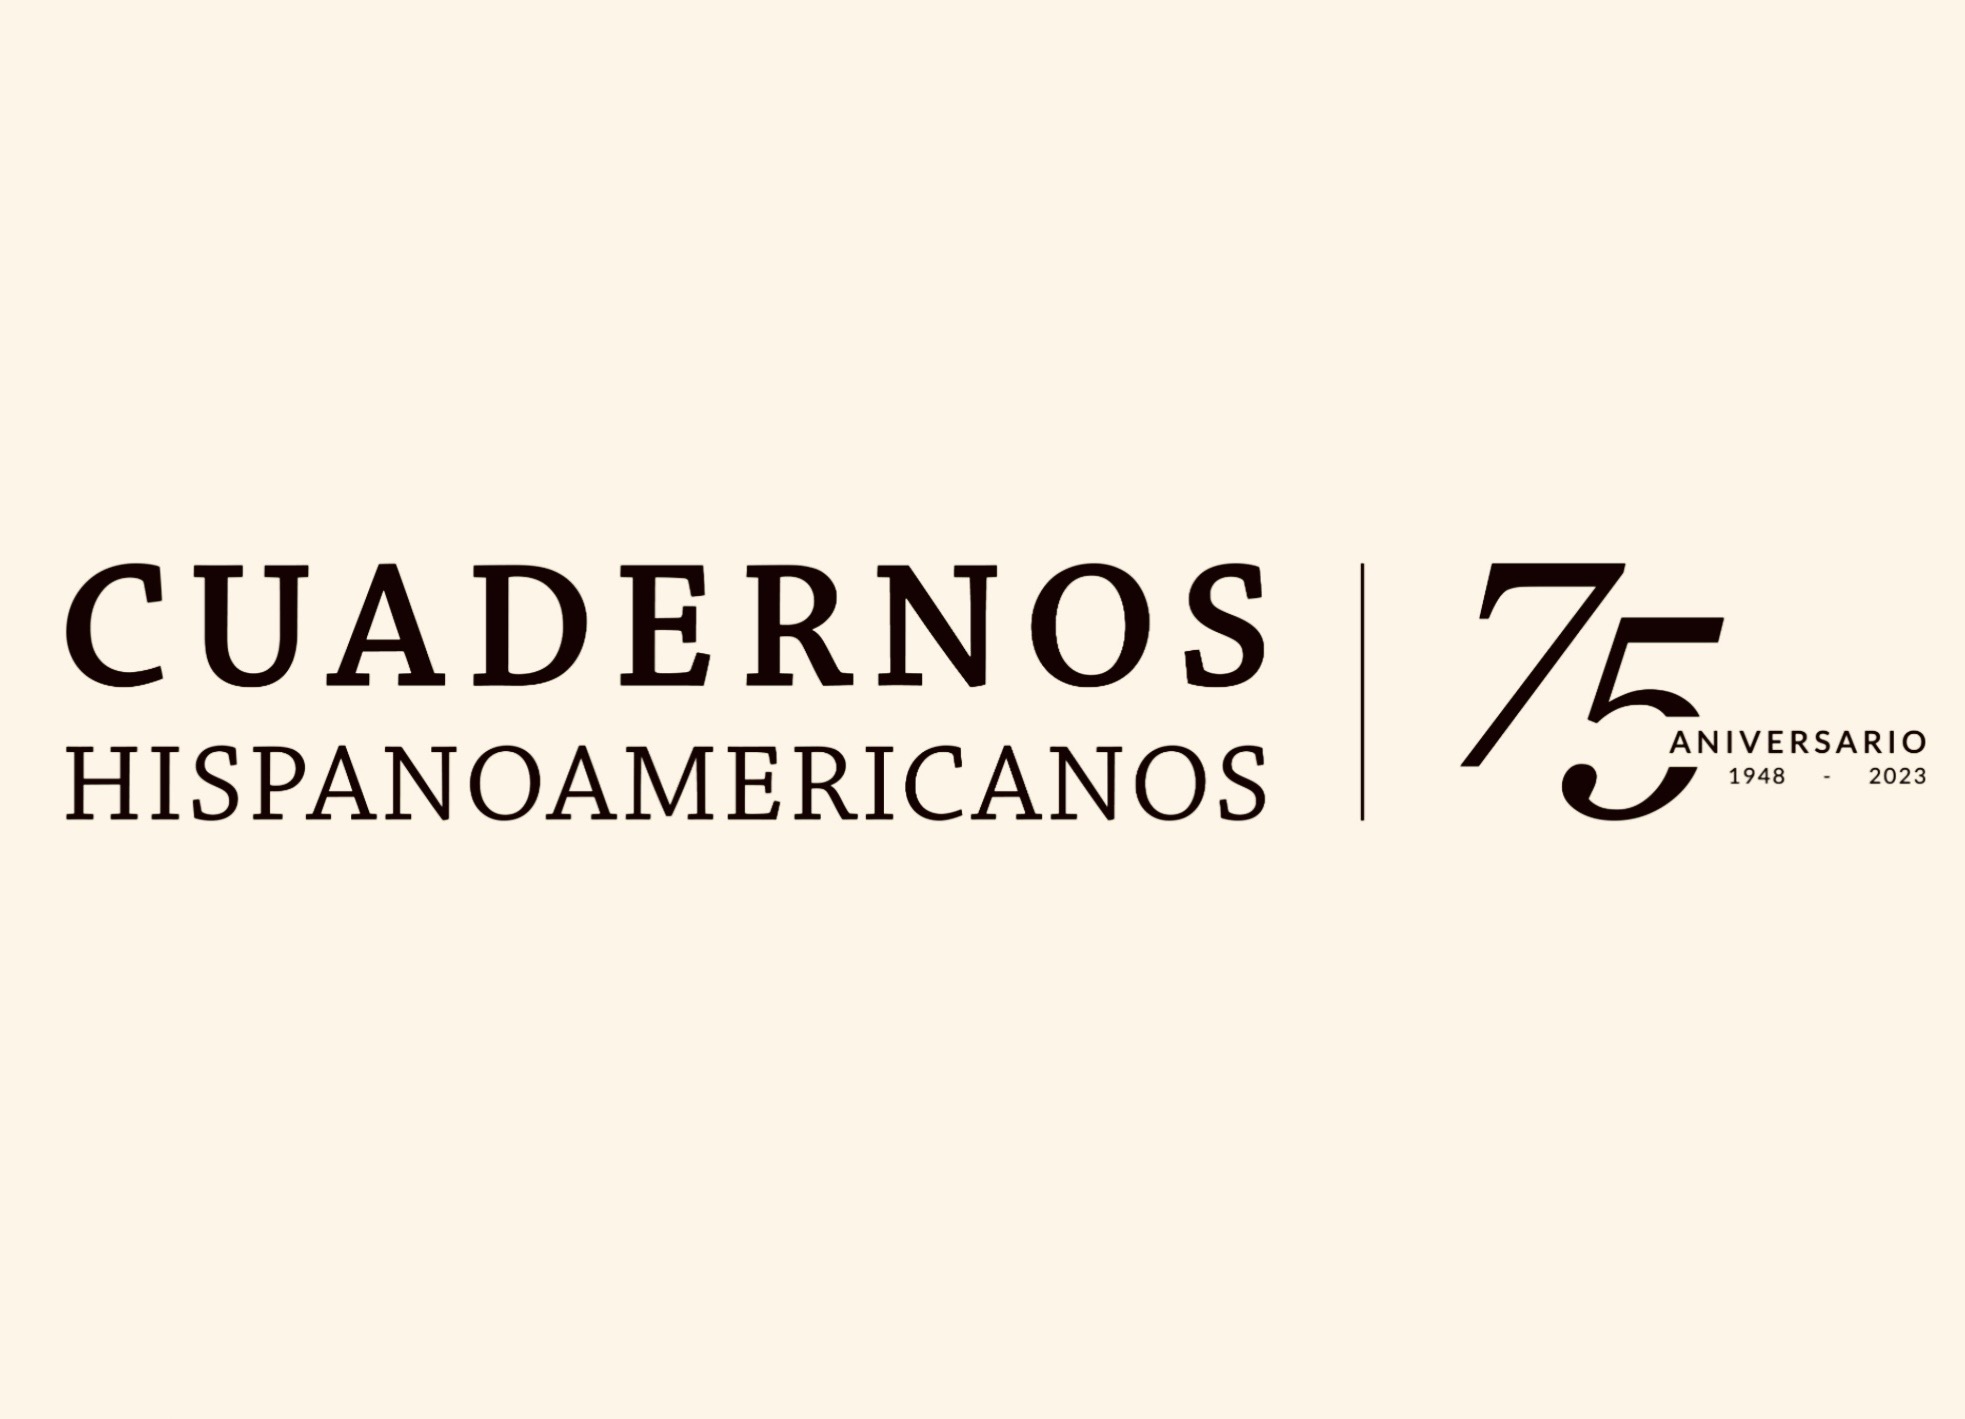 Cuadernos Hispaniamericanos. 75 aniversario 1948-2023